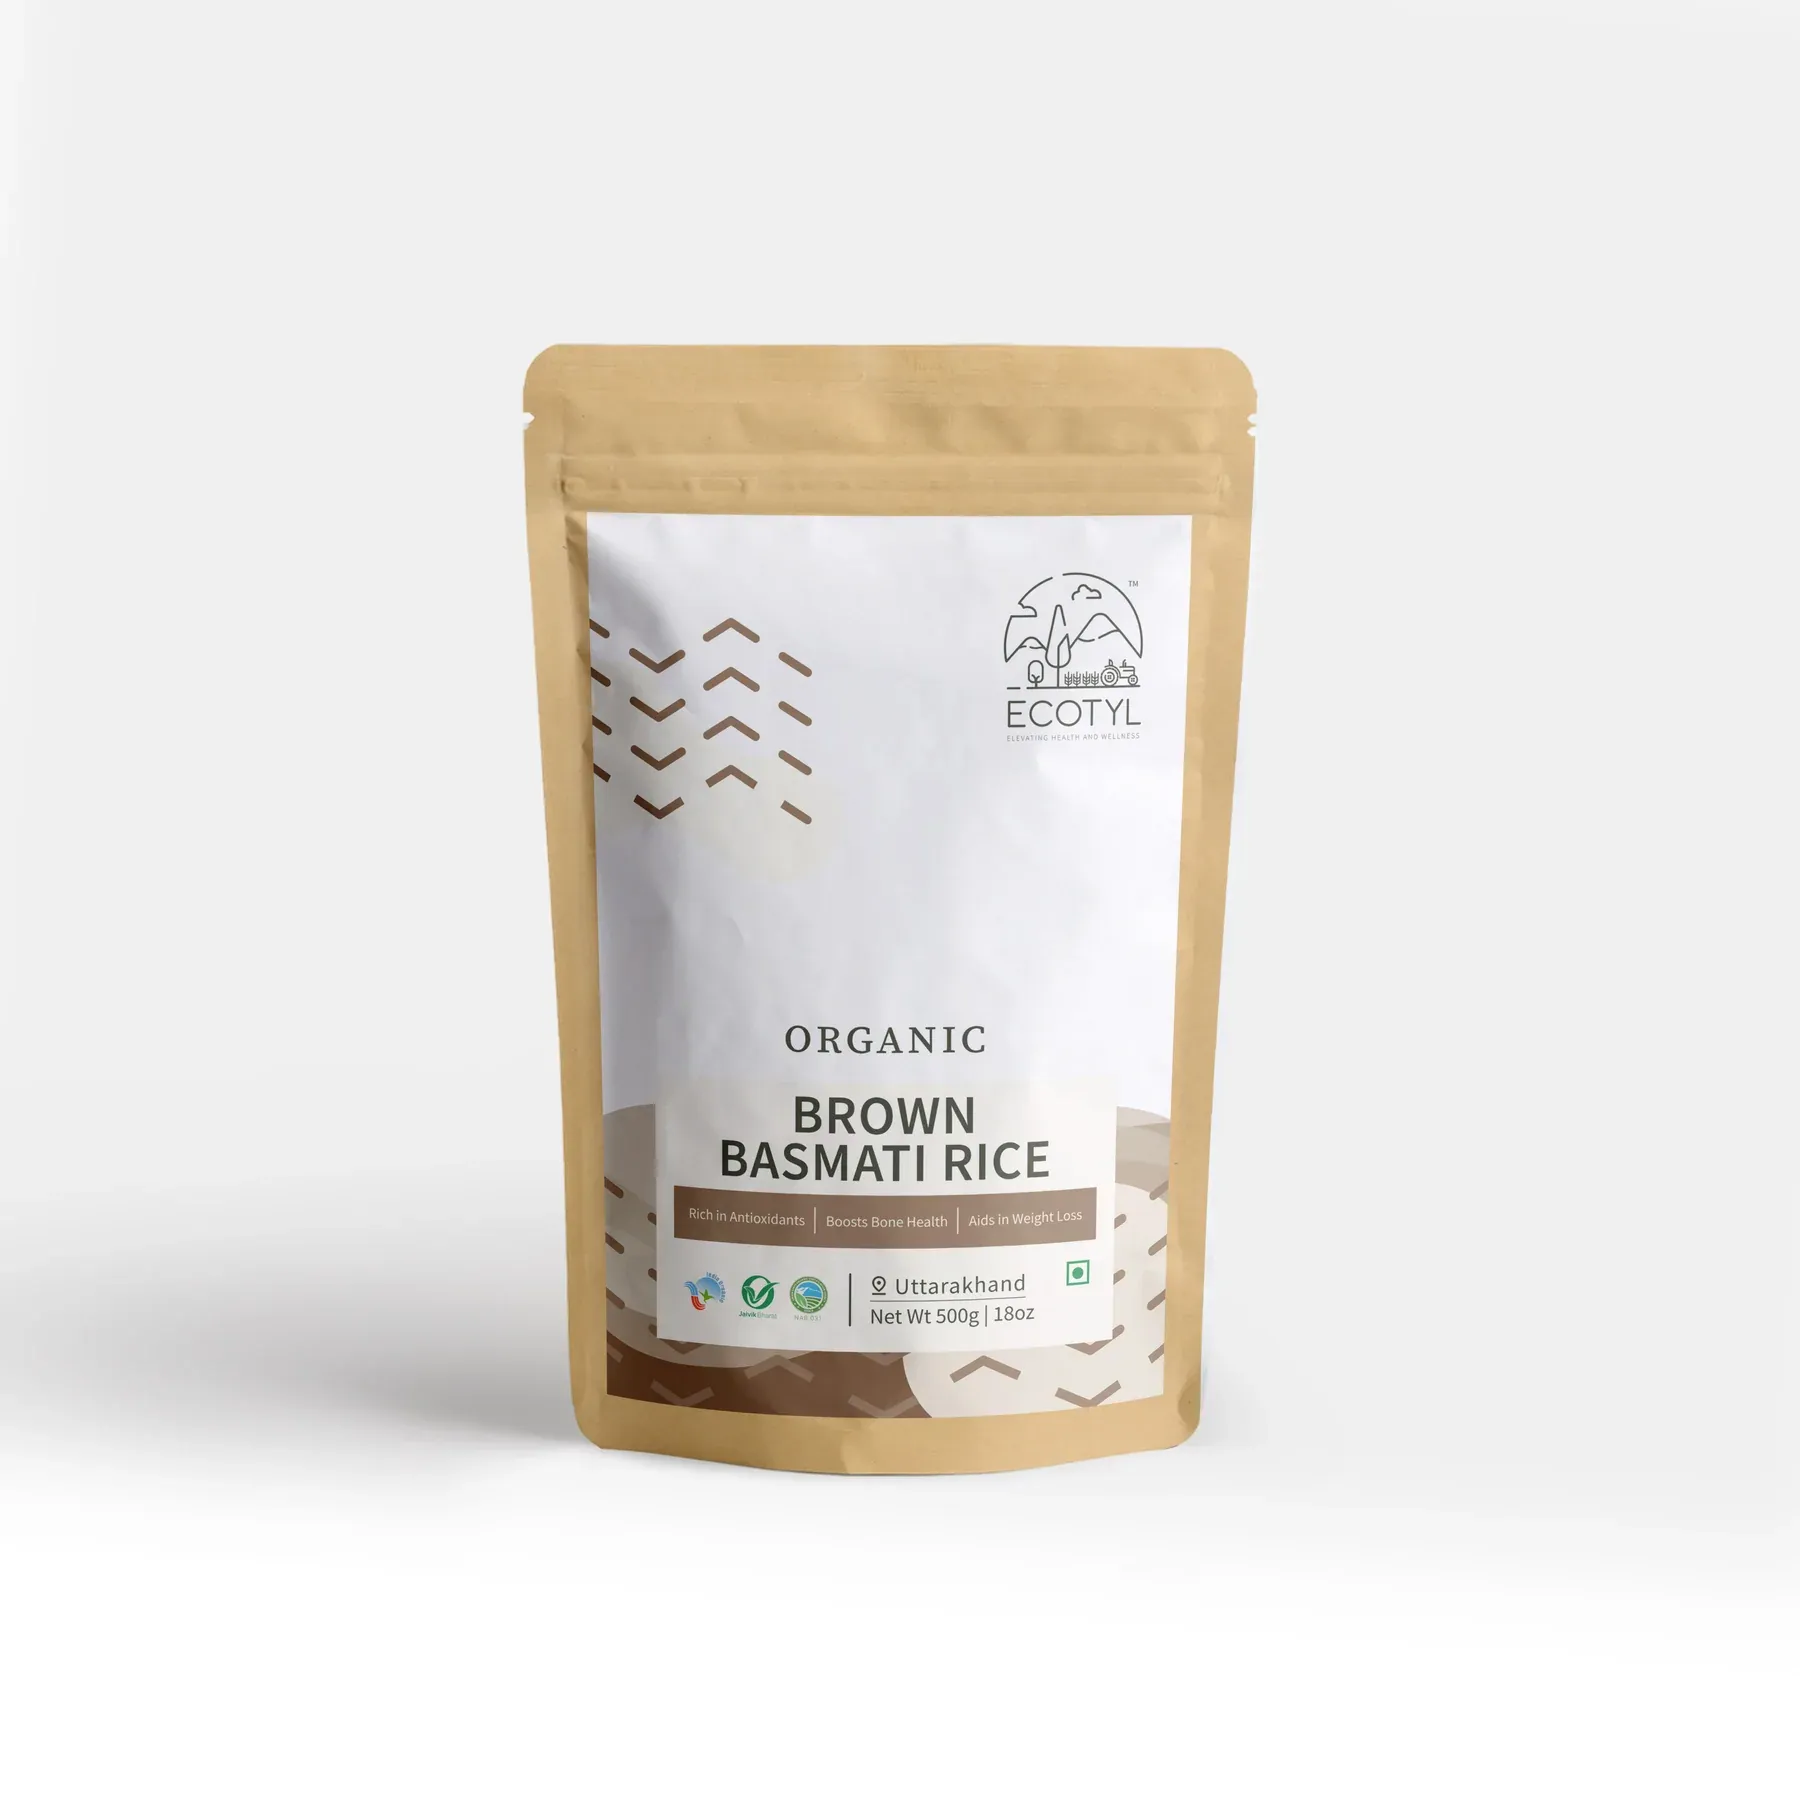 Ecotyl Organic Brown Basmati Rice Image